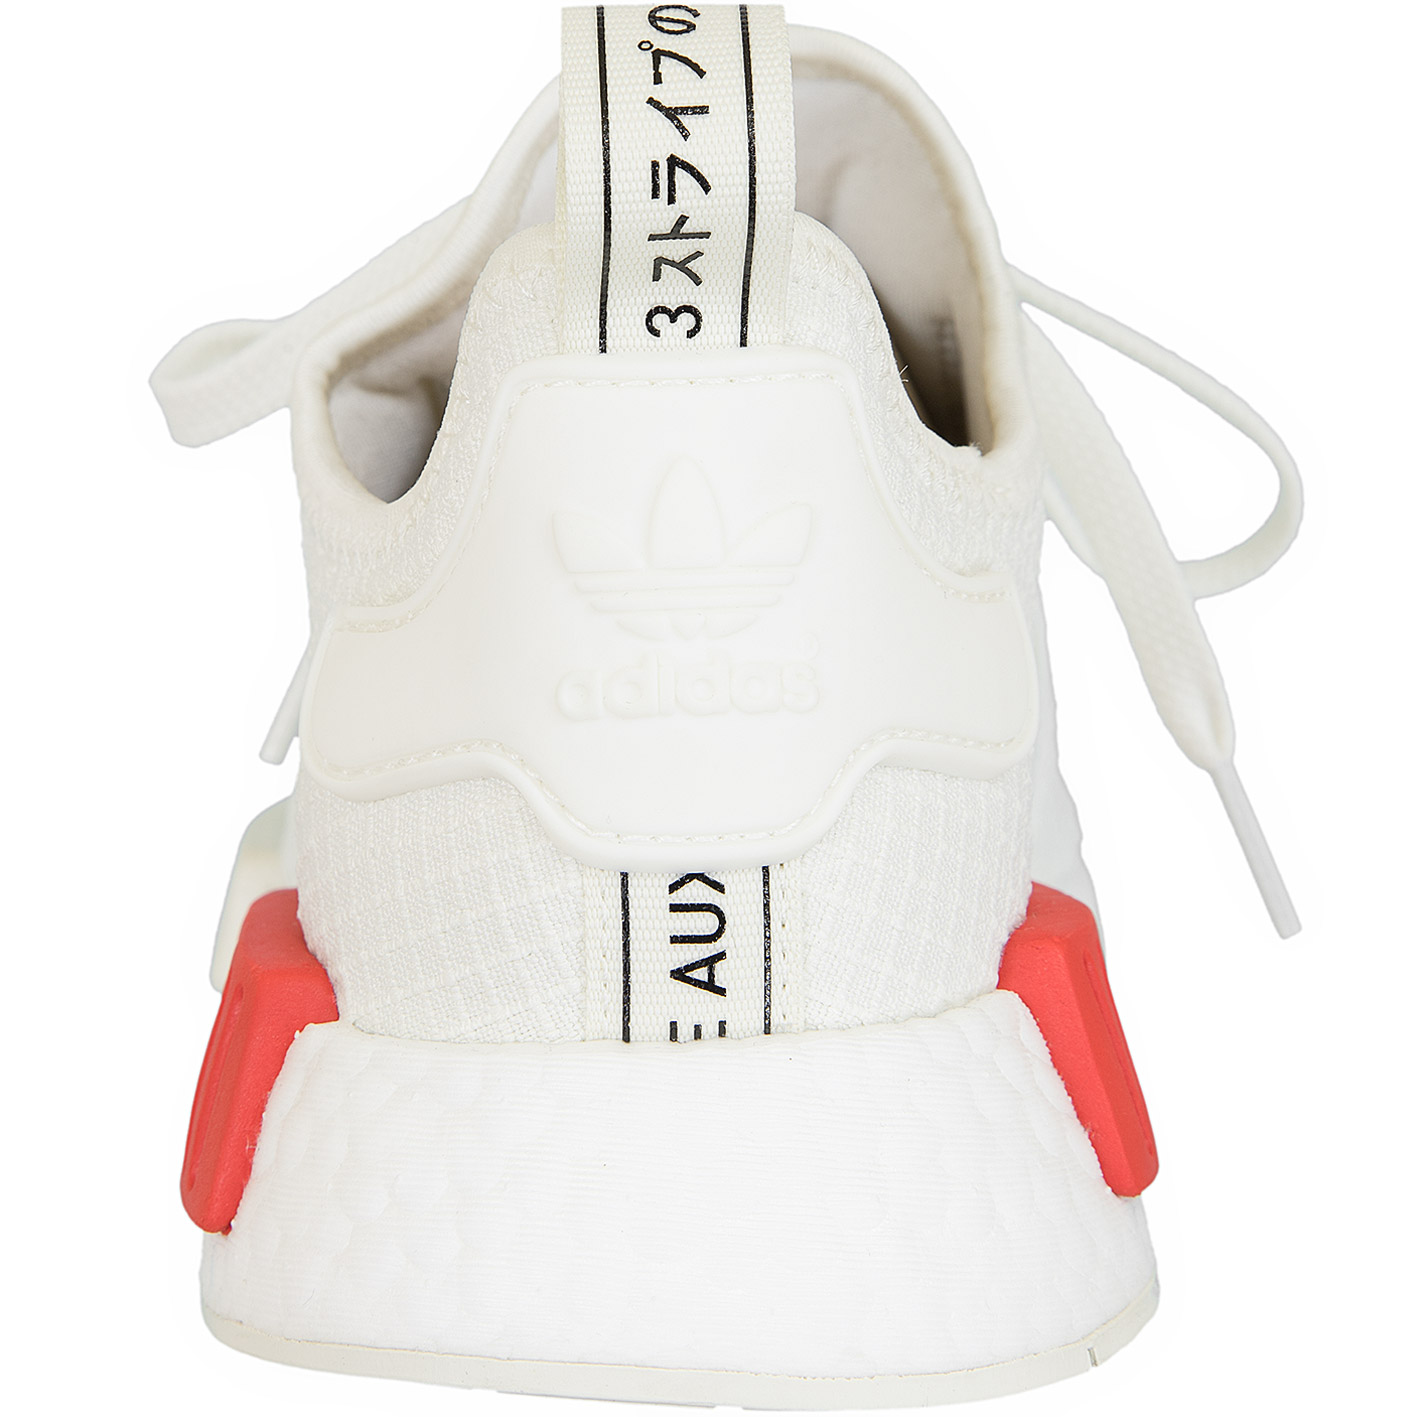 ☆ Adidas Originals Sneaker NMD R1 weiß/rot - hier bestellen!